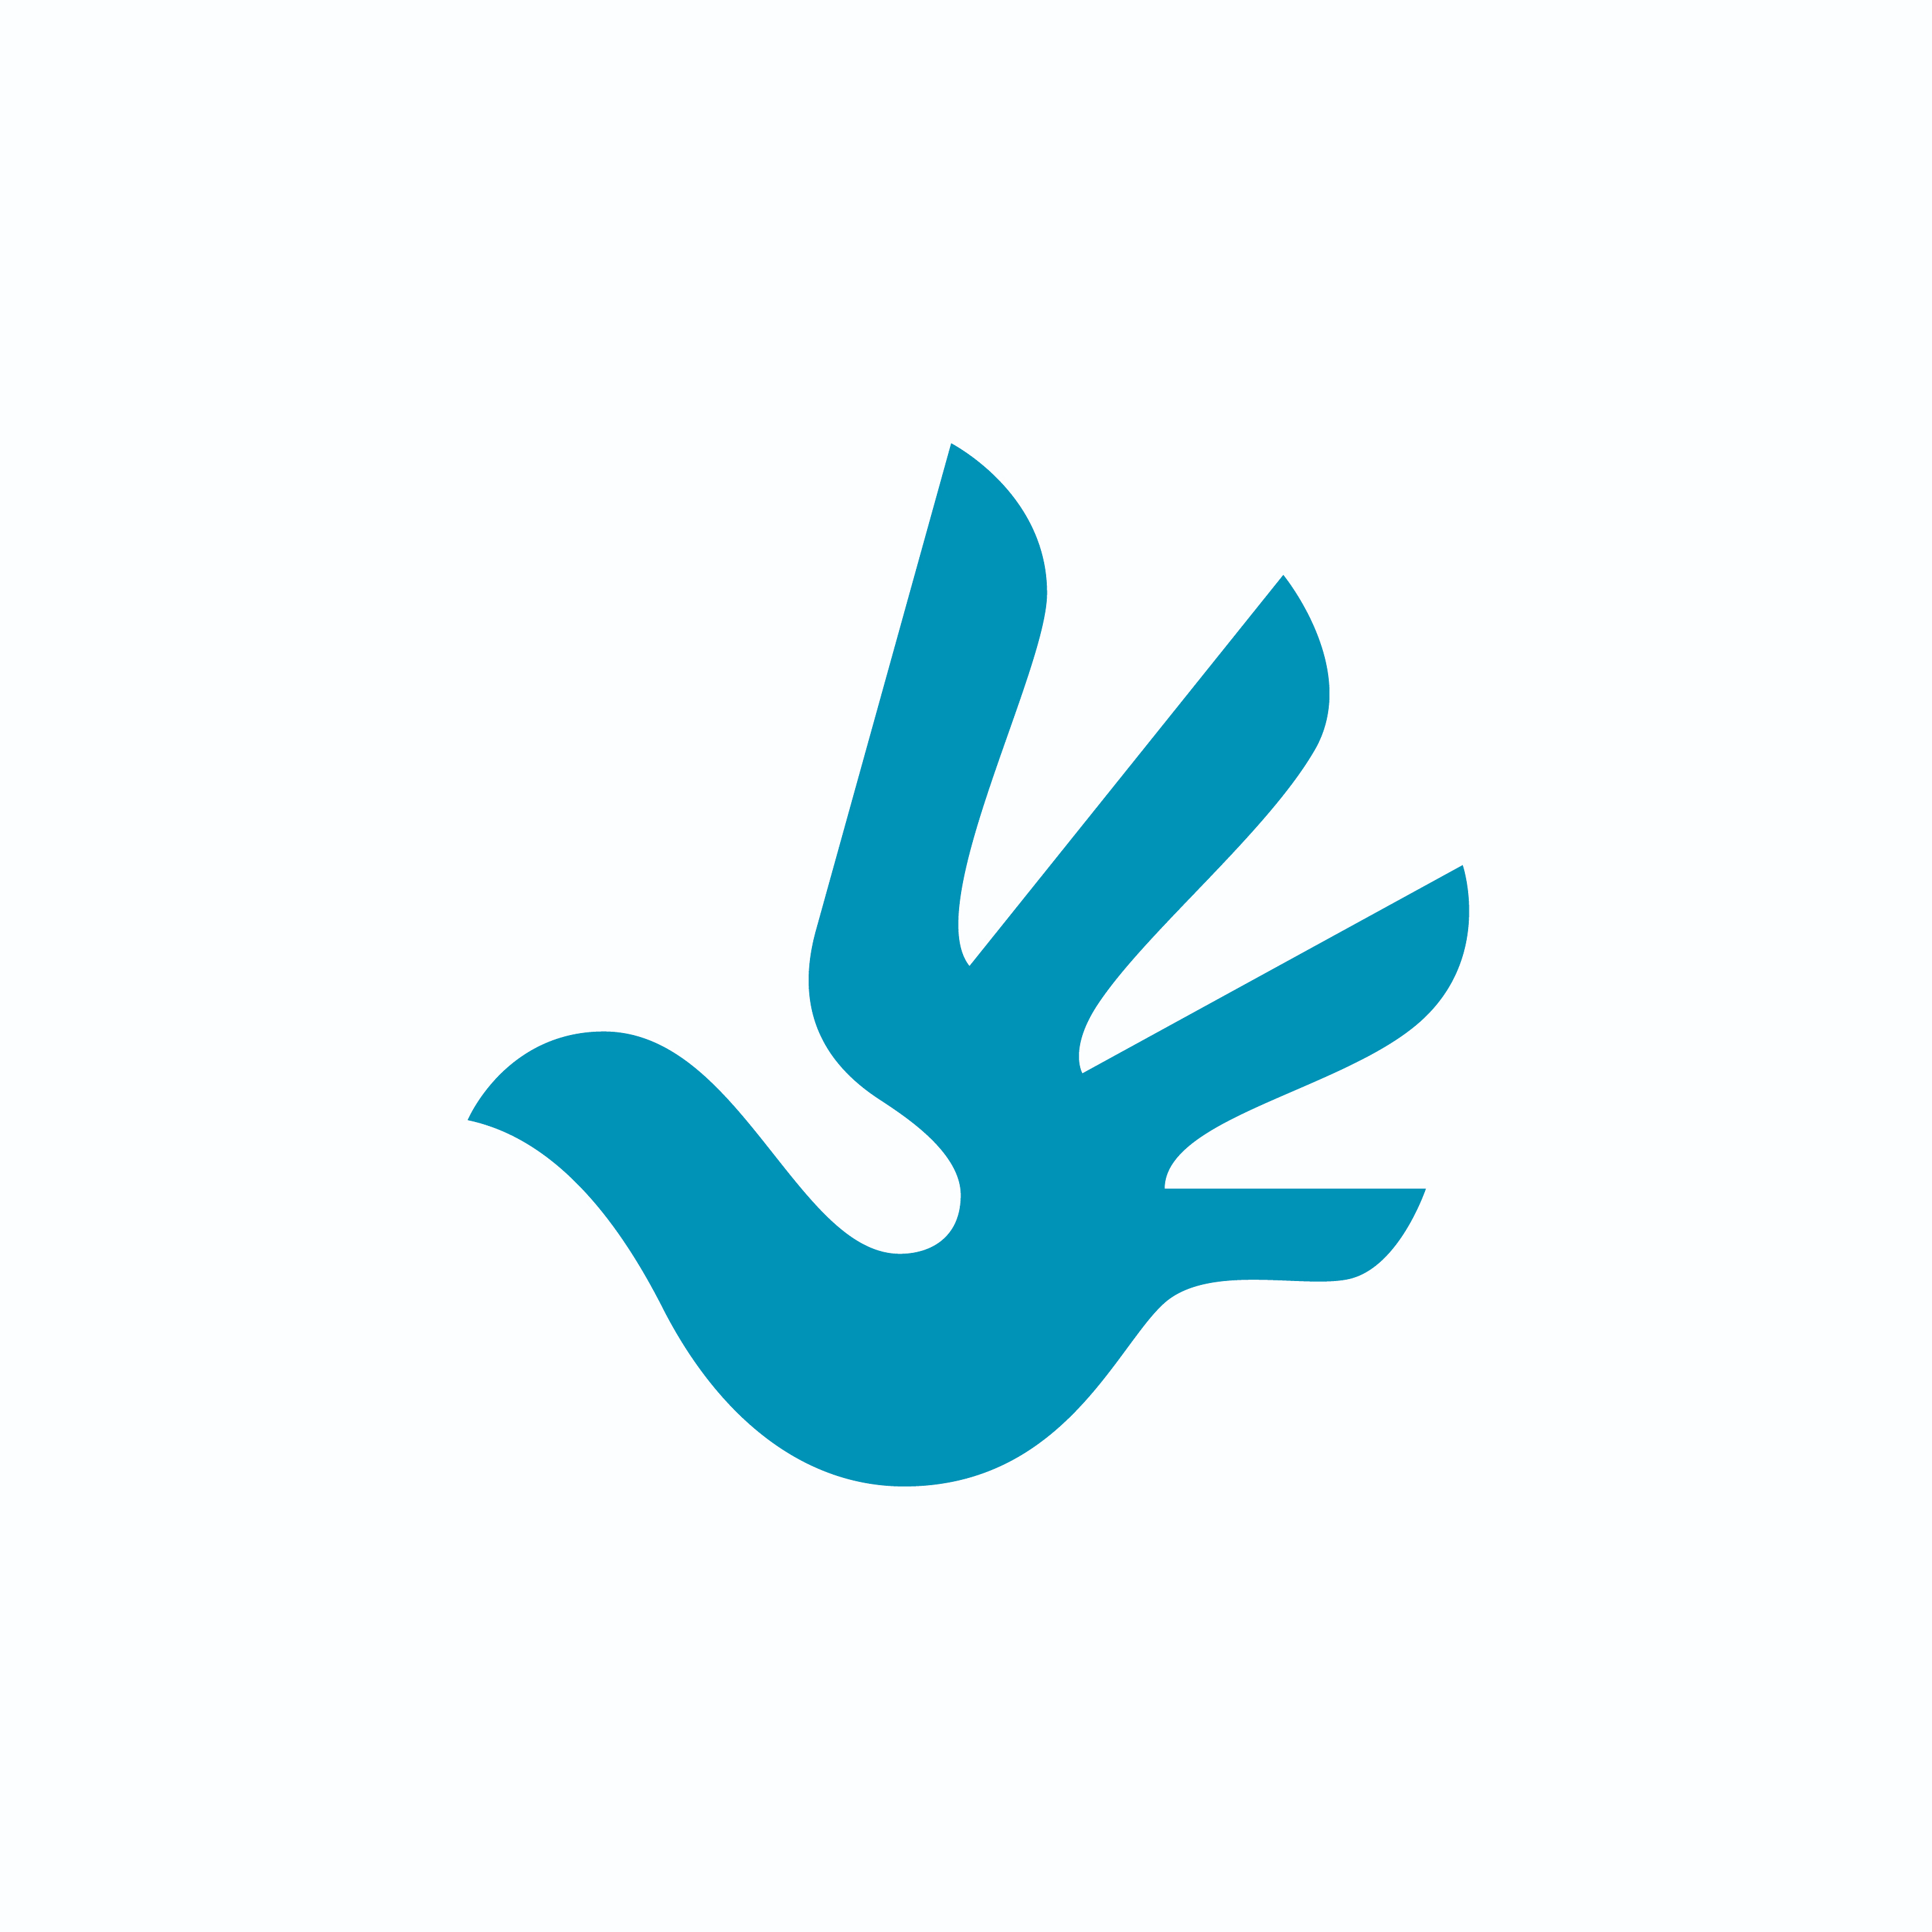 International logo for human rights. Hand holding a bird.